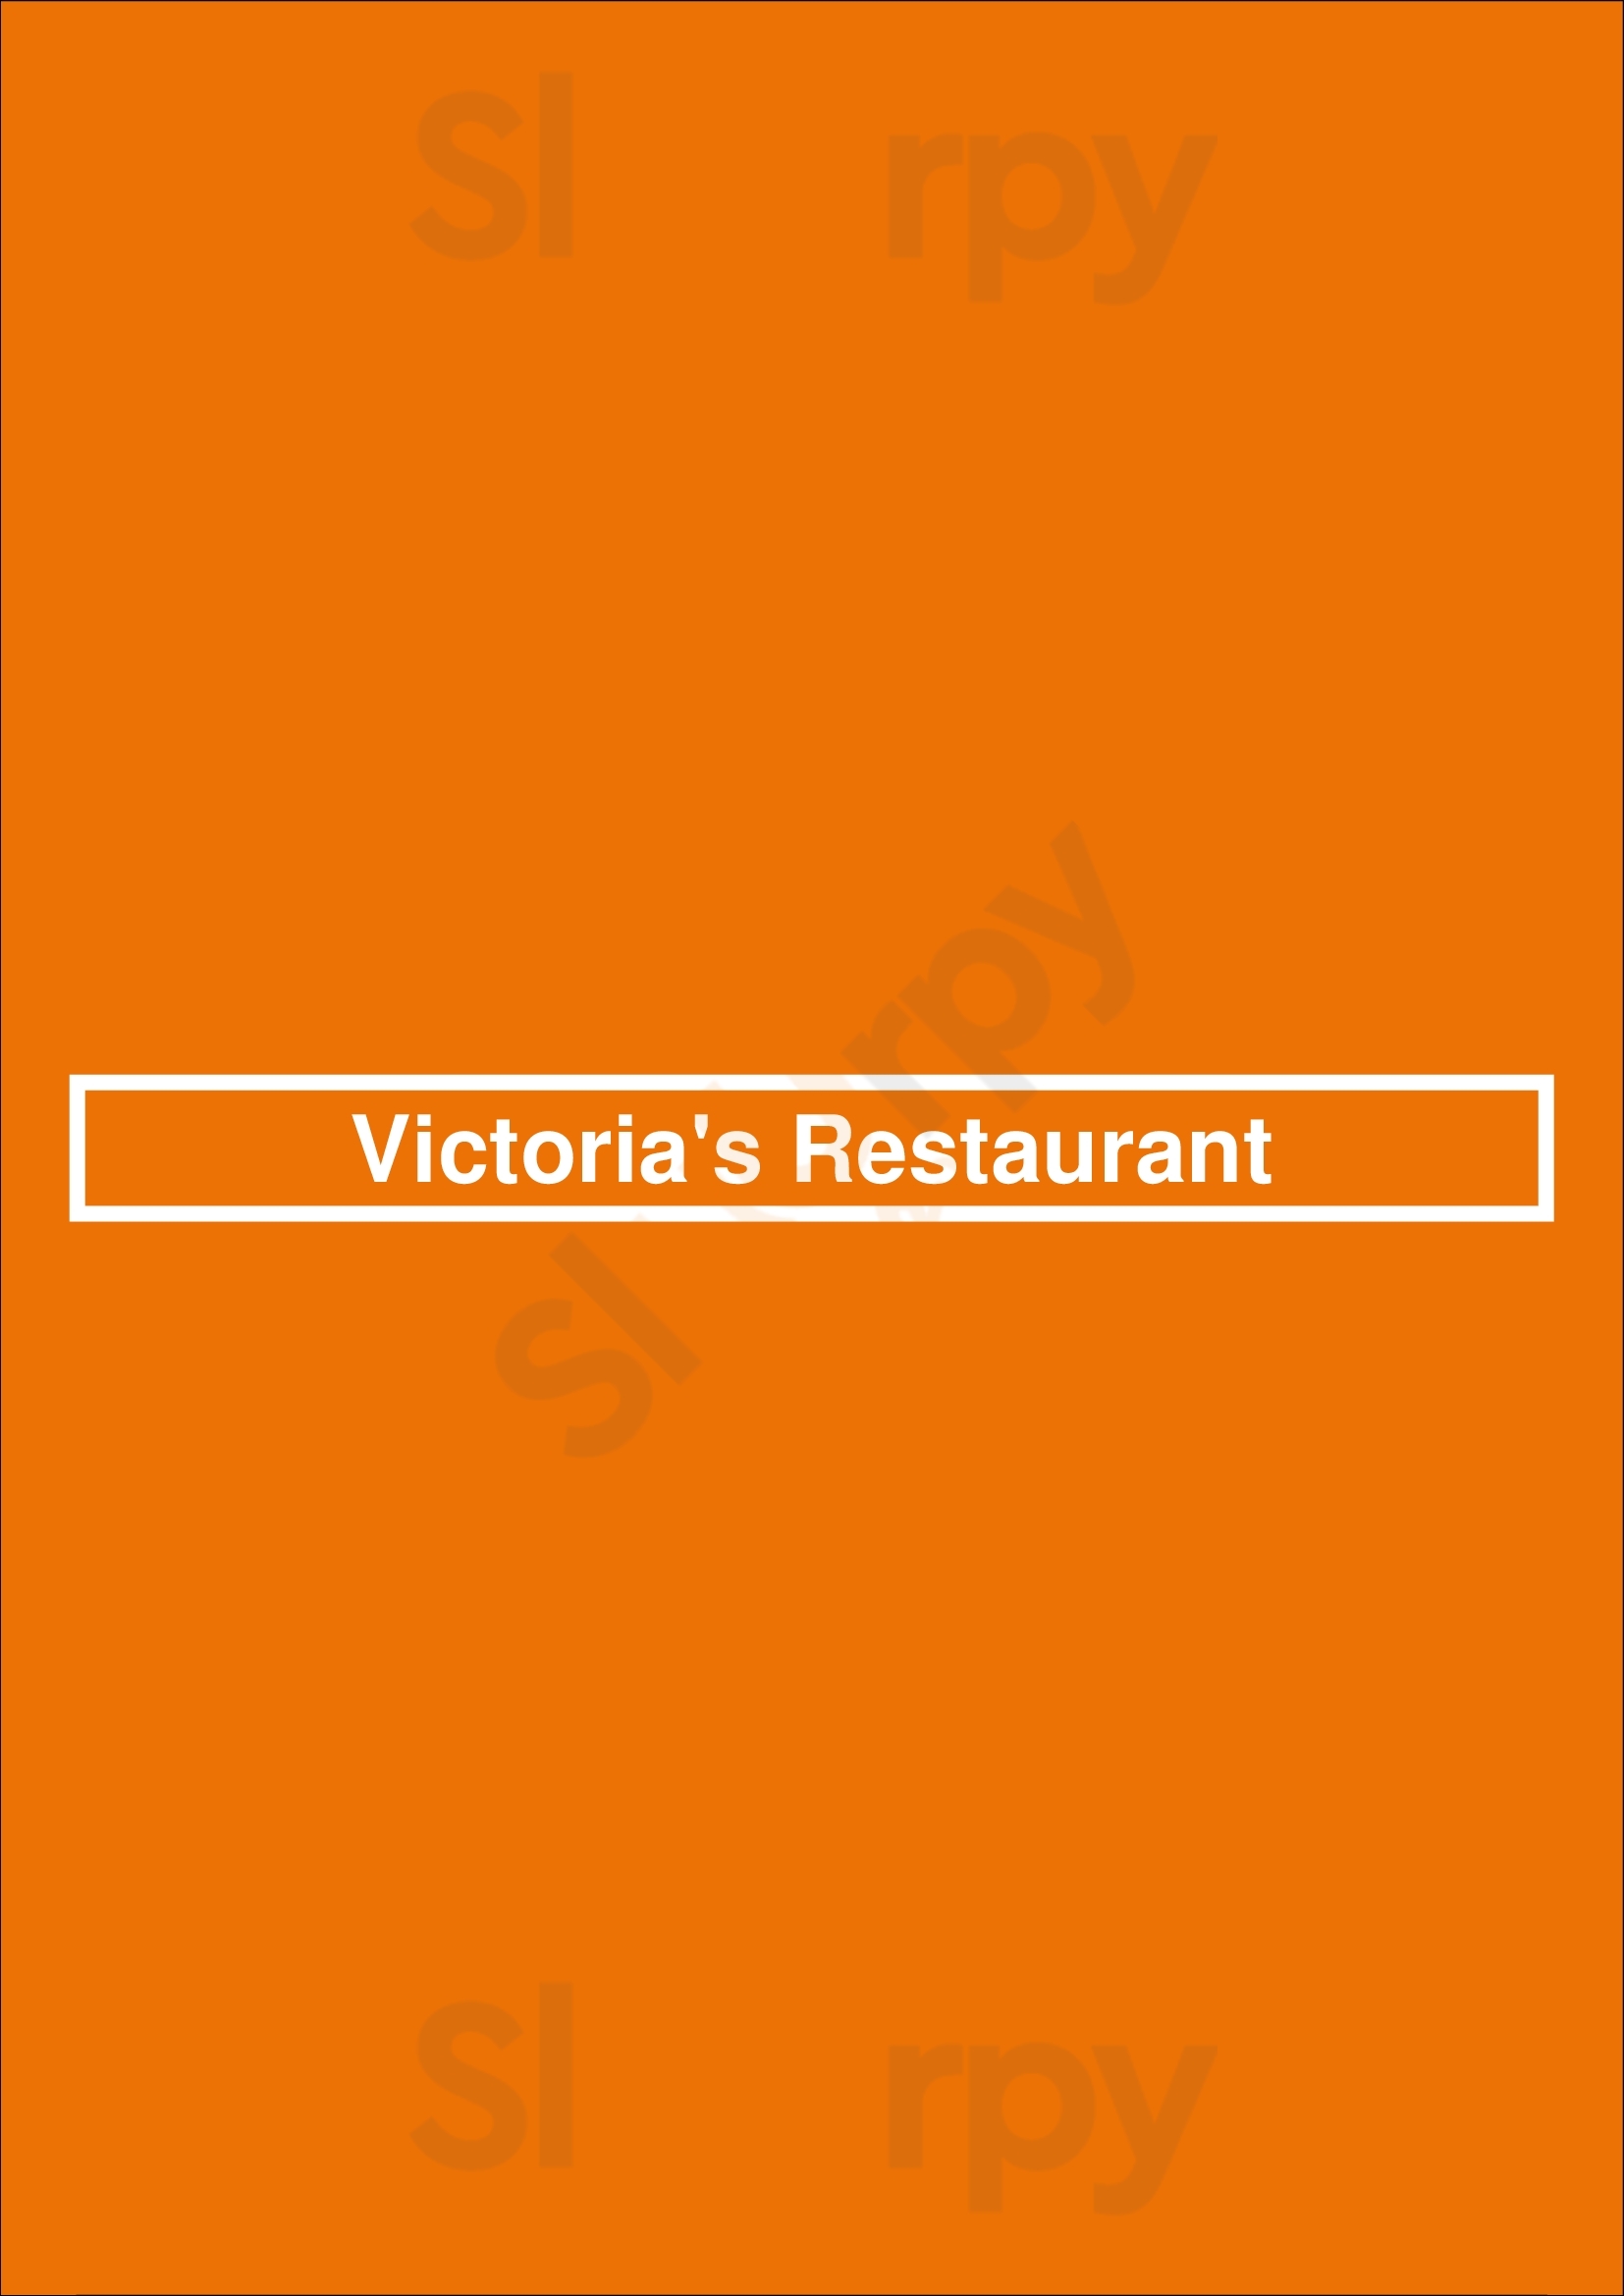 Victoria's Restaurant Toronto Menu - 1